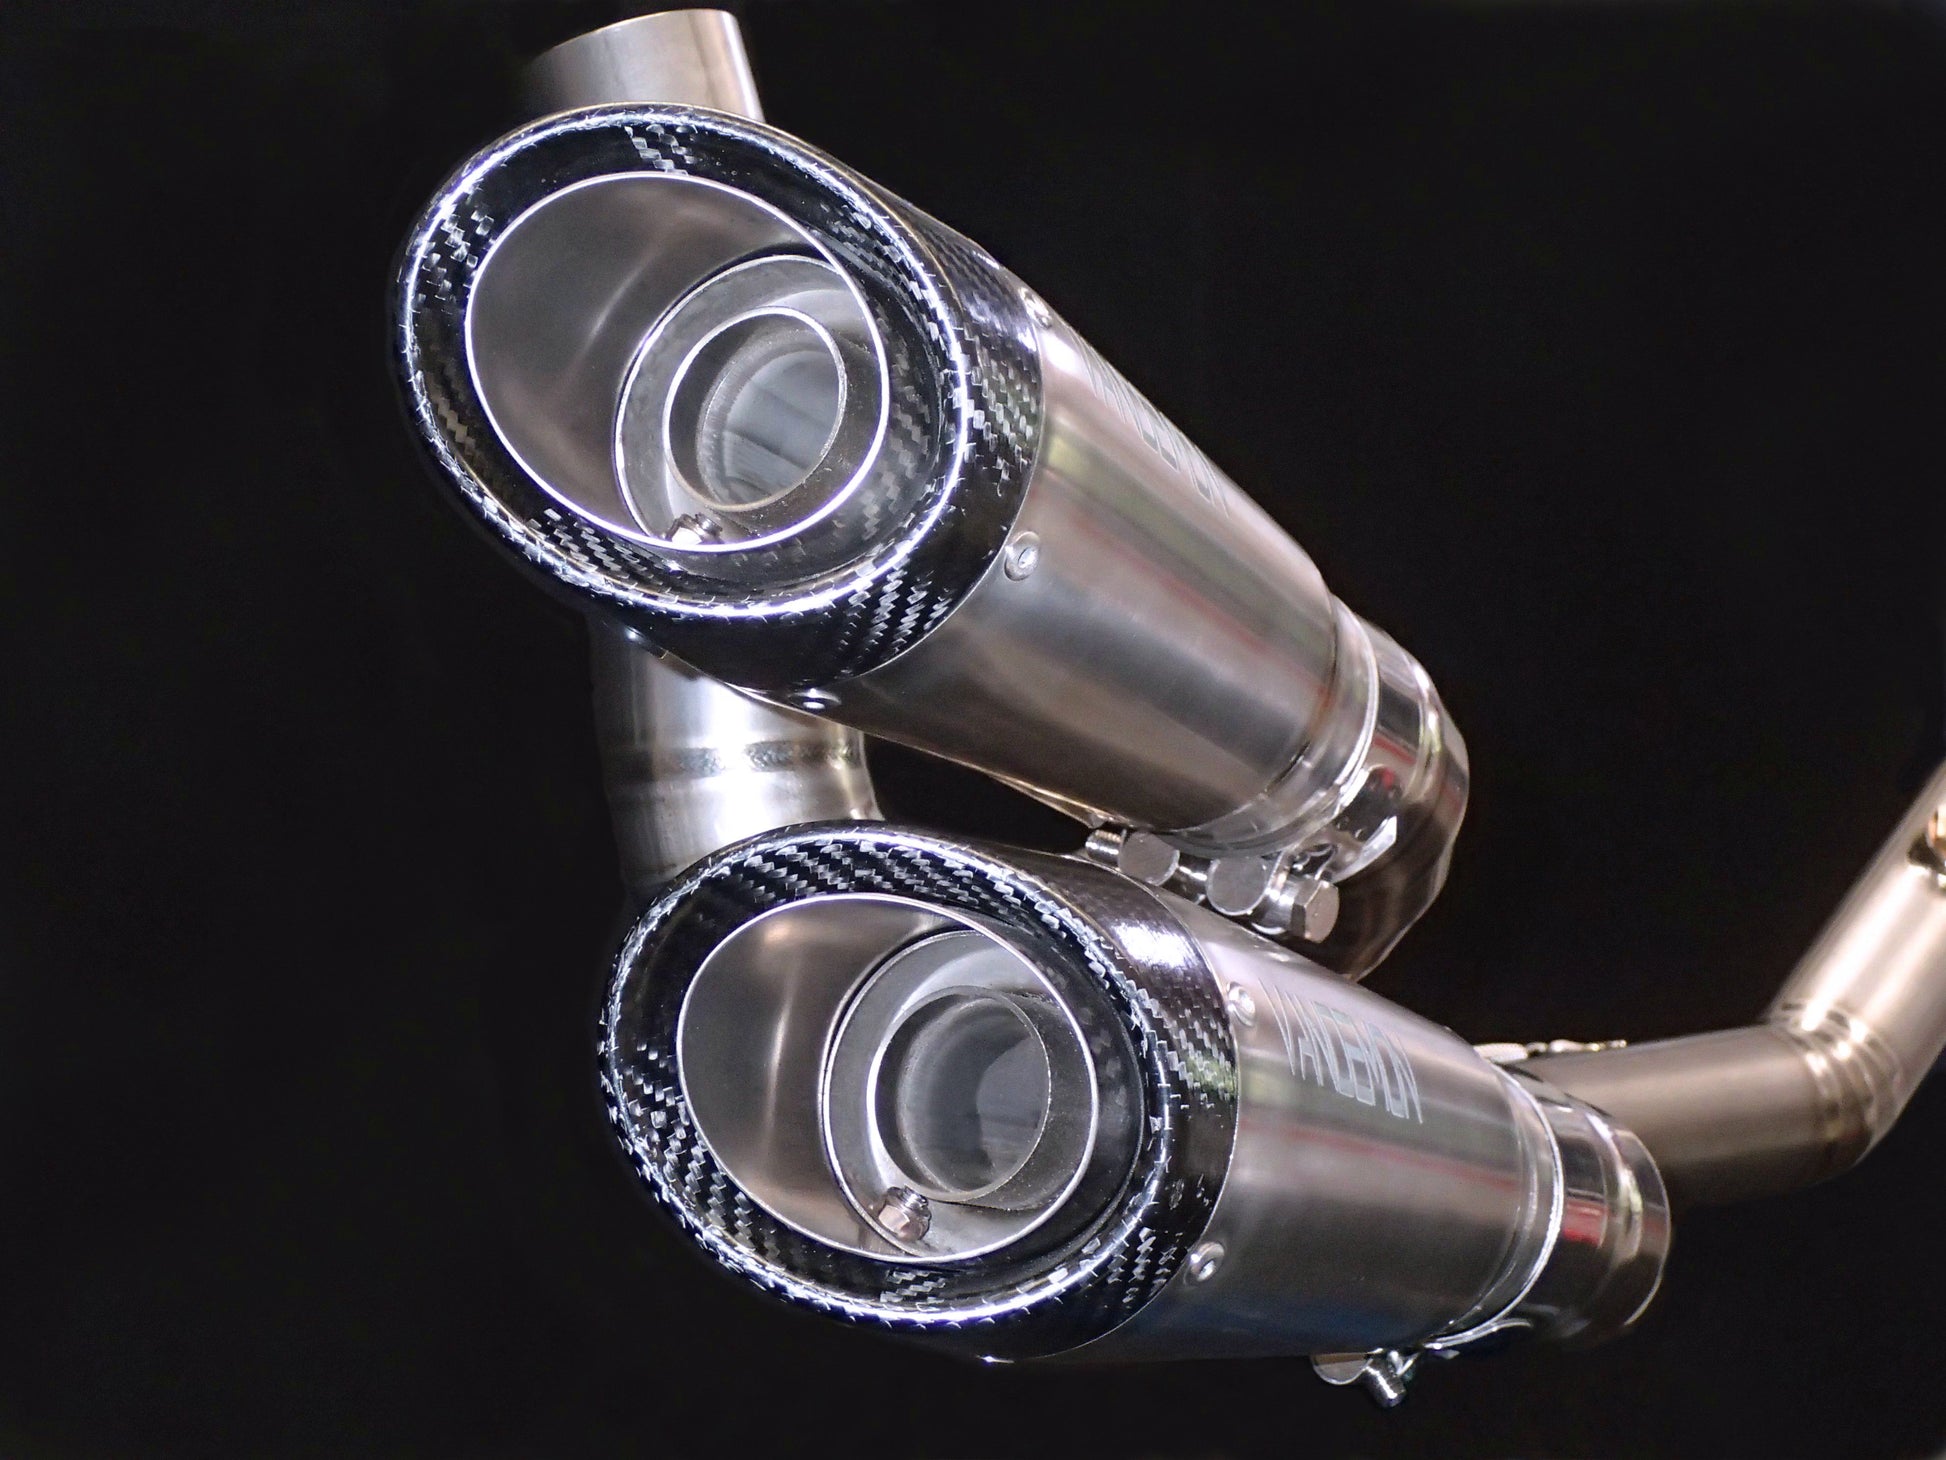 2016-19 XDiavel 1260 Full Titanium Exhaust Mufflers silencers installed